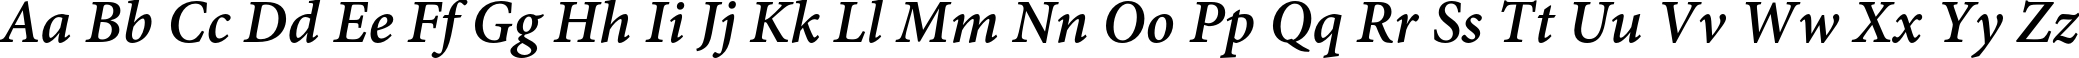 Пример написания английского алфавита шрифтом Adobe Devanagari Bold Italic